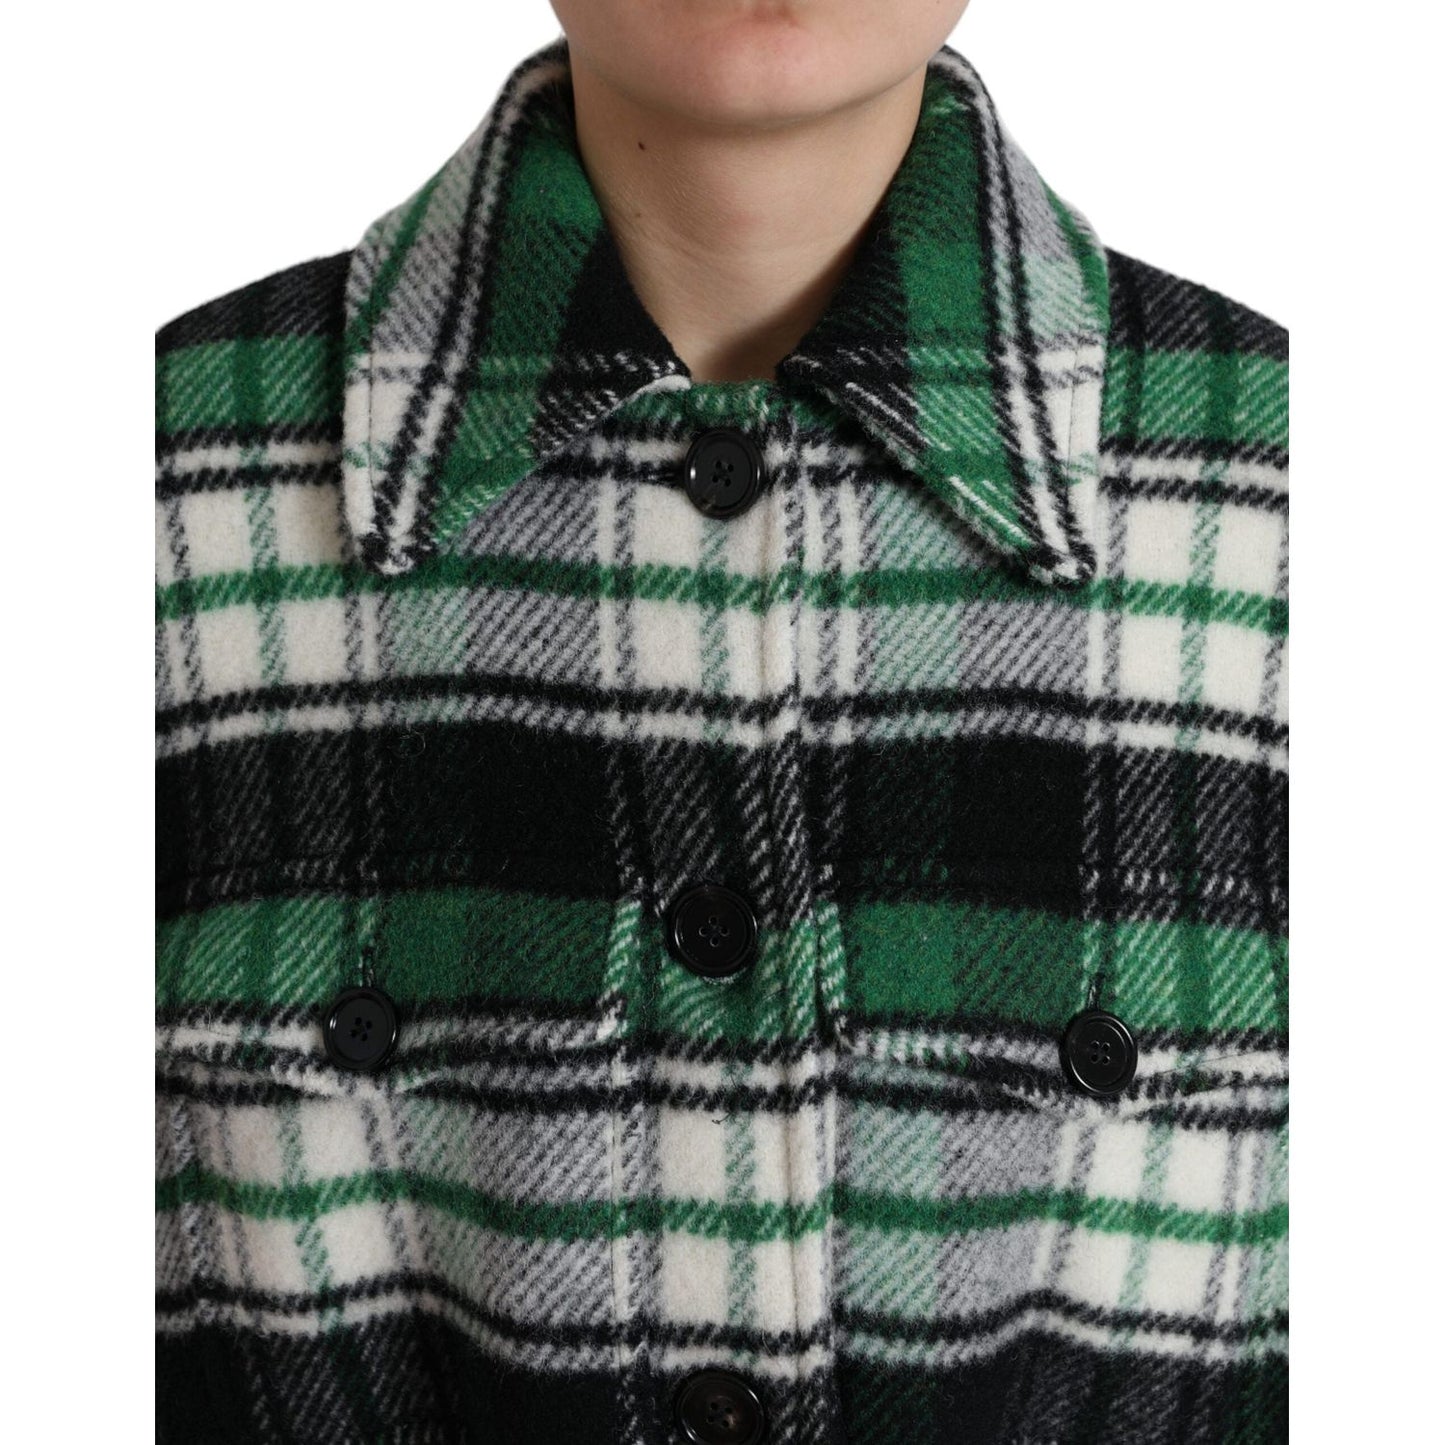 Dolce & Gabbana Elegant Green Plaid Long Coat green-plaid-long-sleeve-casual-coat-jacket